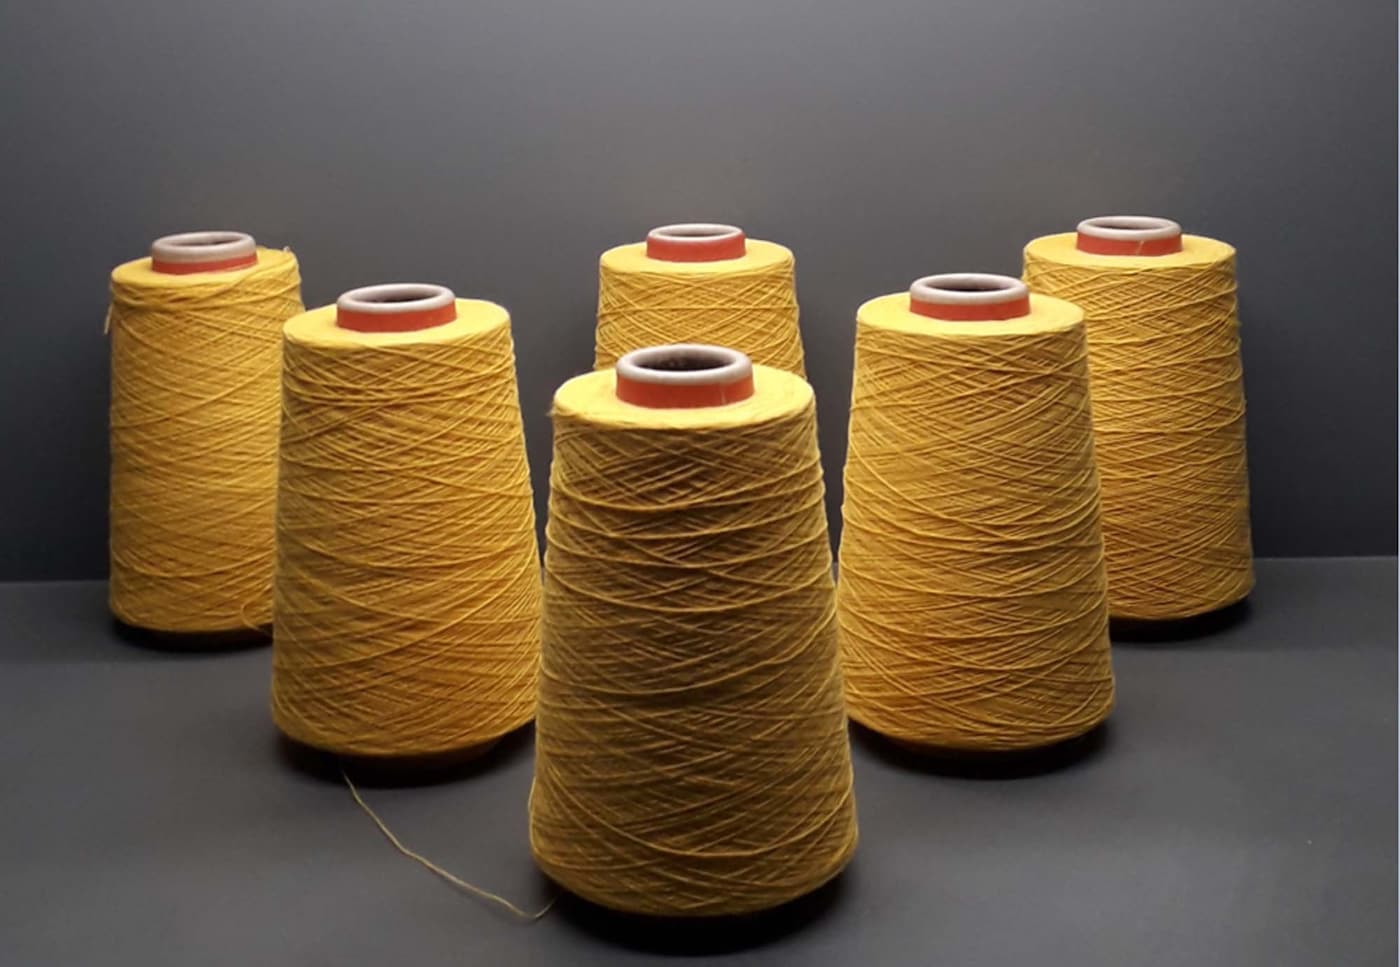 Six large spools of fine yellow yarn.